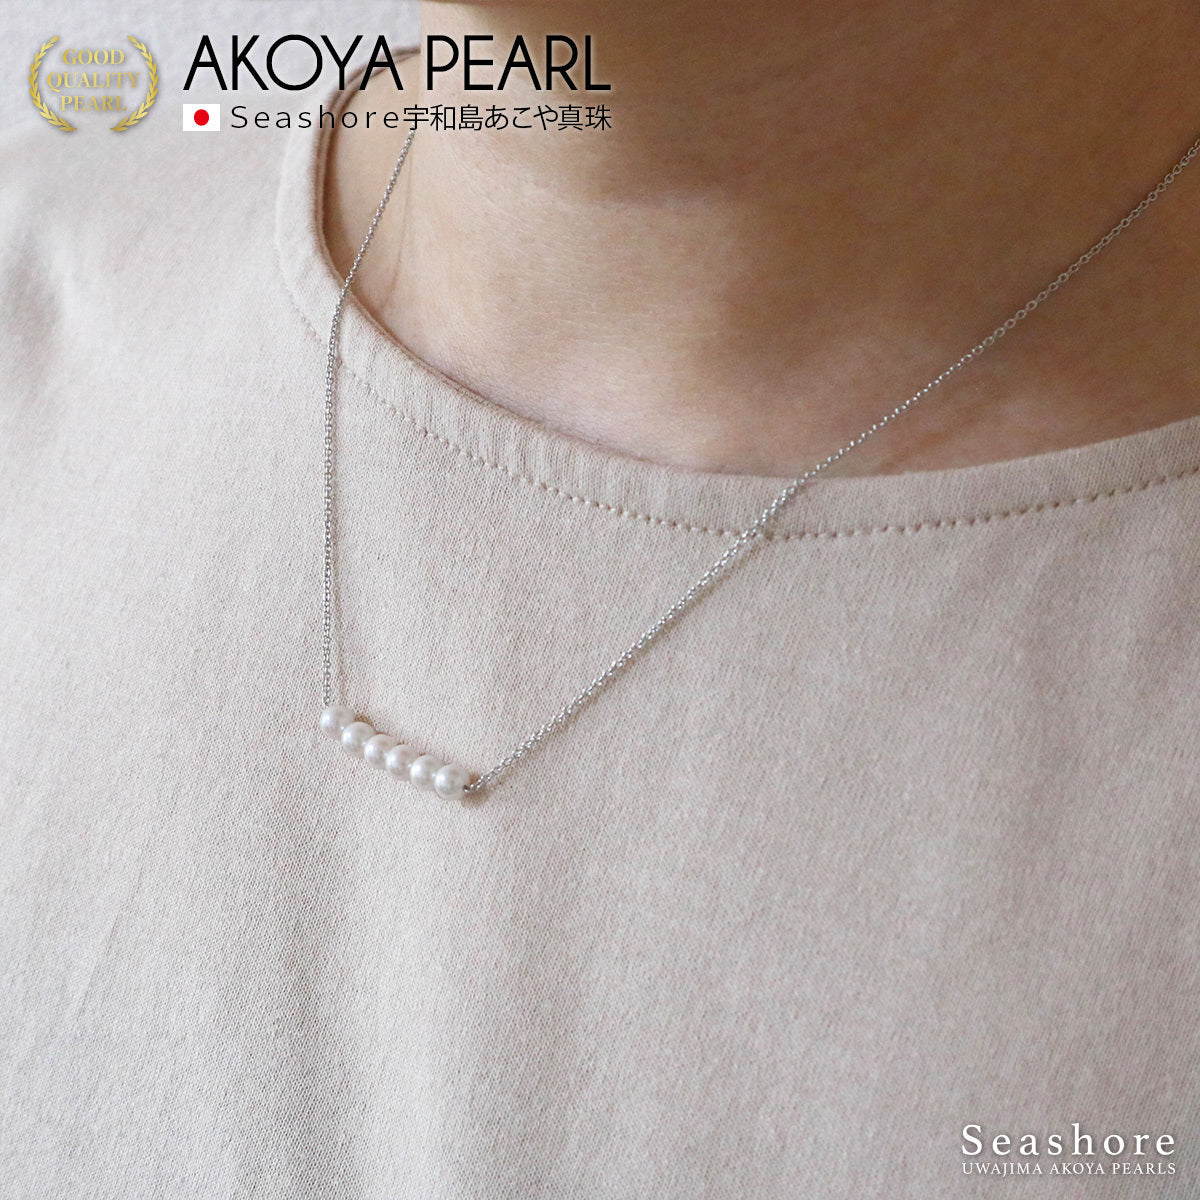 Baby pearl 6 bead bar necklace [4.5-5.0mm] SV925 Akoya pearl (3838)